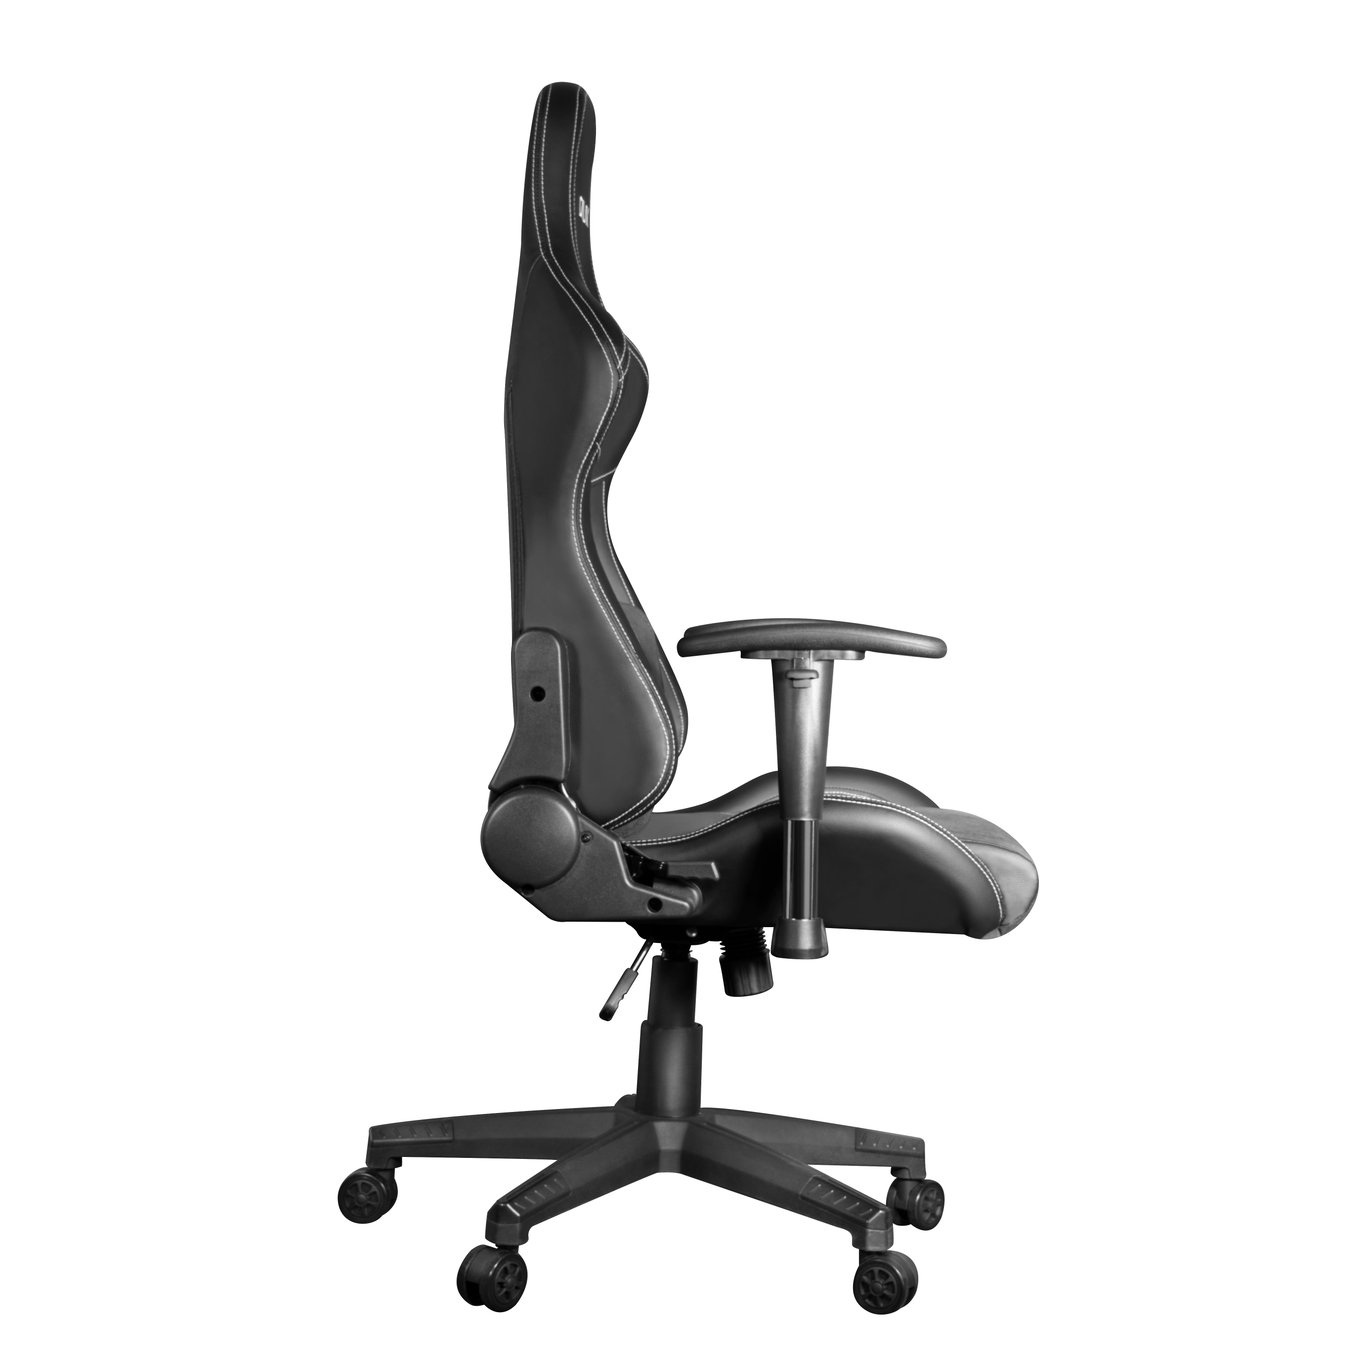 GALAX Gaming Chair Series GC-04  - Black -2